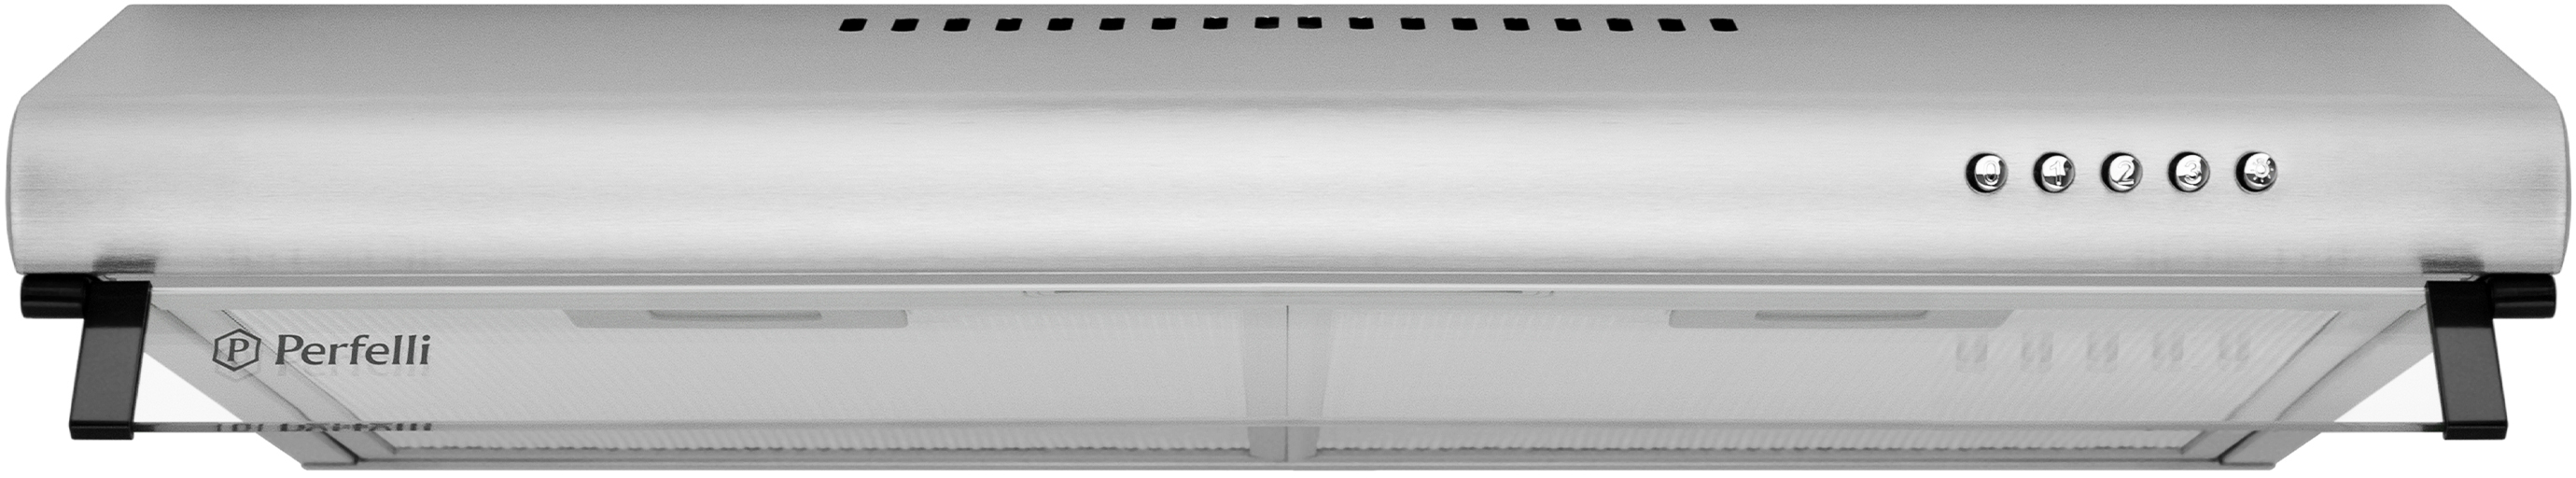 Вытяжка Perfelli с алюминиевым фильтром Perfelli PL 6144 I LED